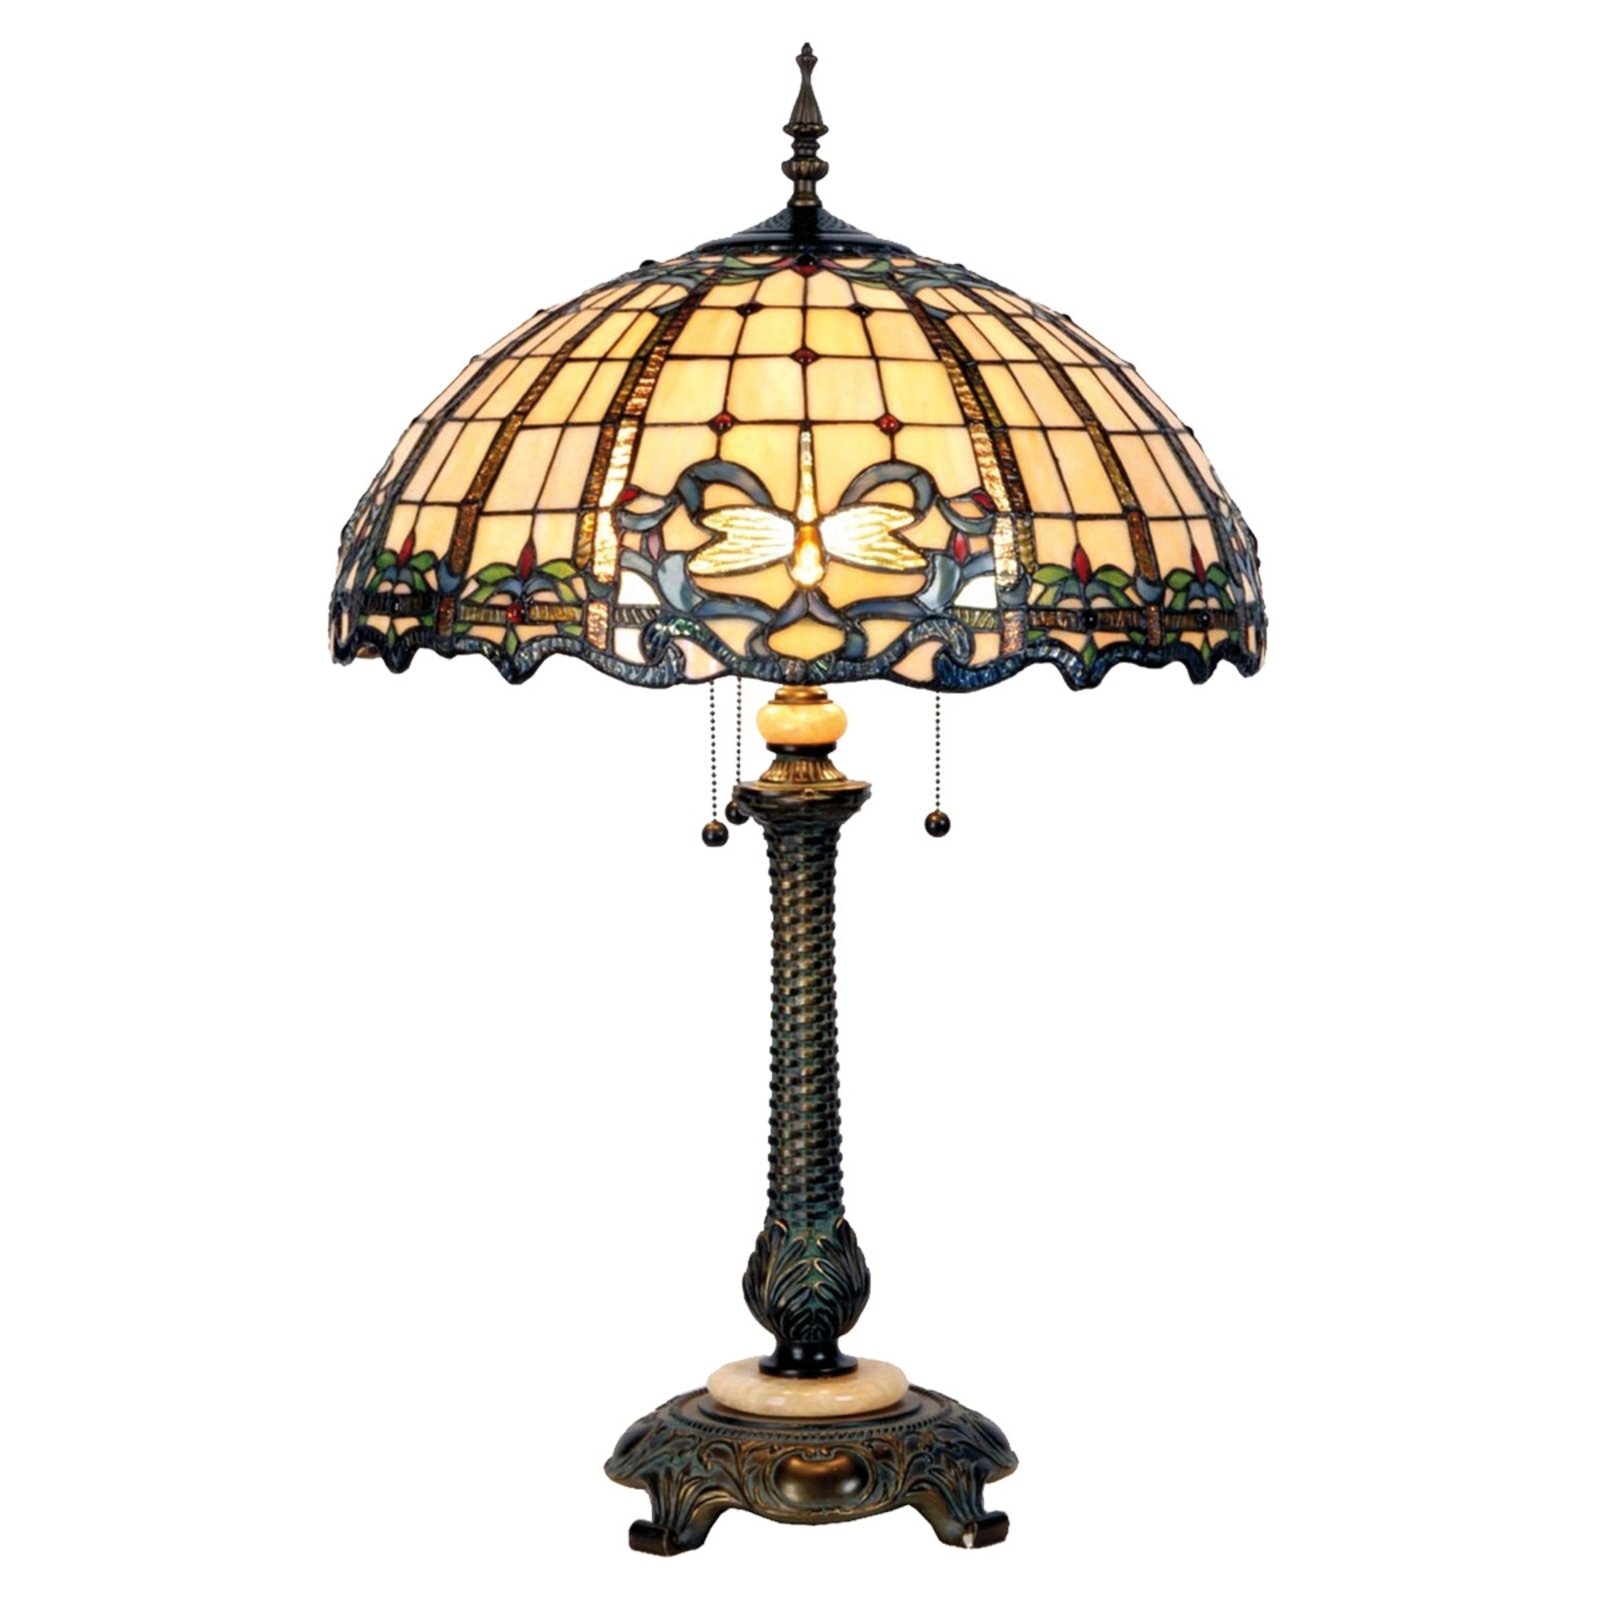 Cudowna lampa stołowa Atlantis, wzornictwo Tiffany